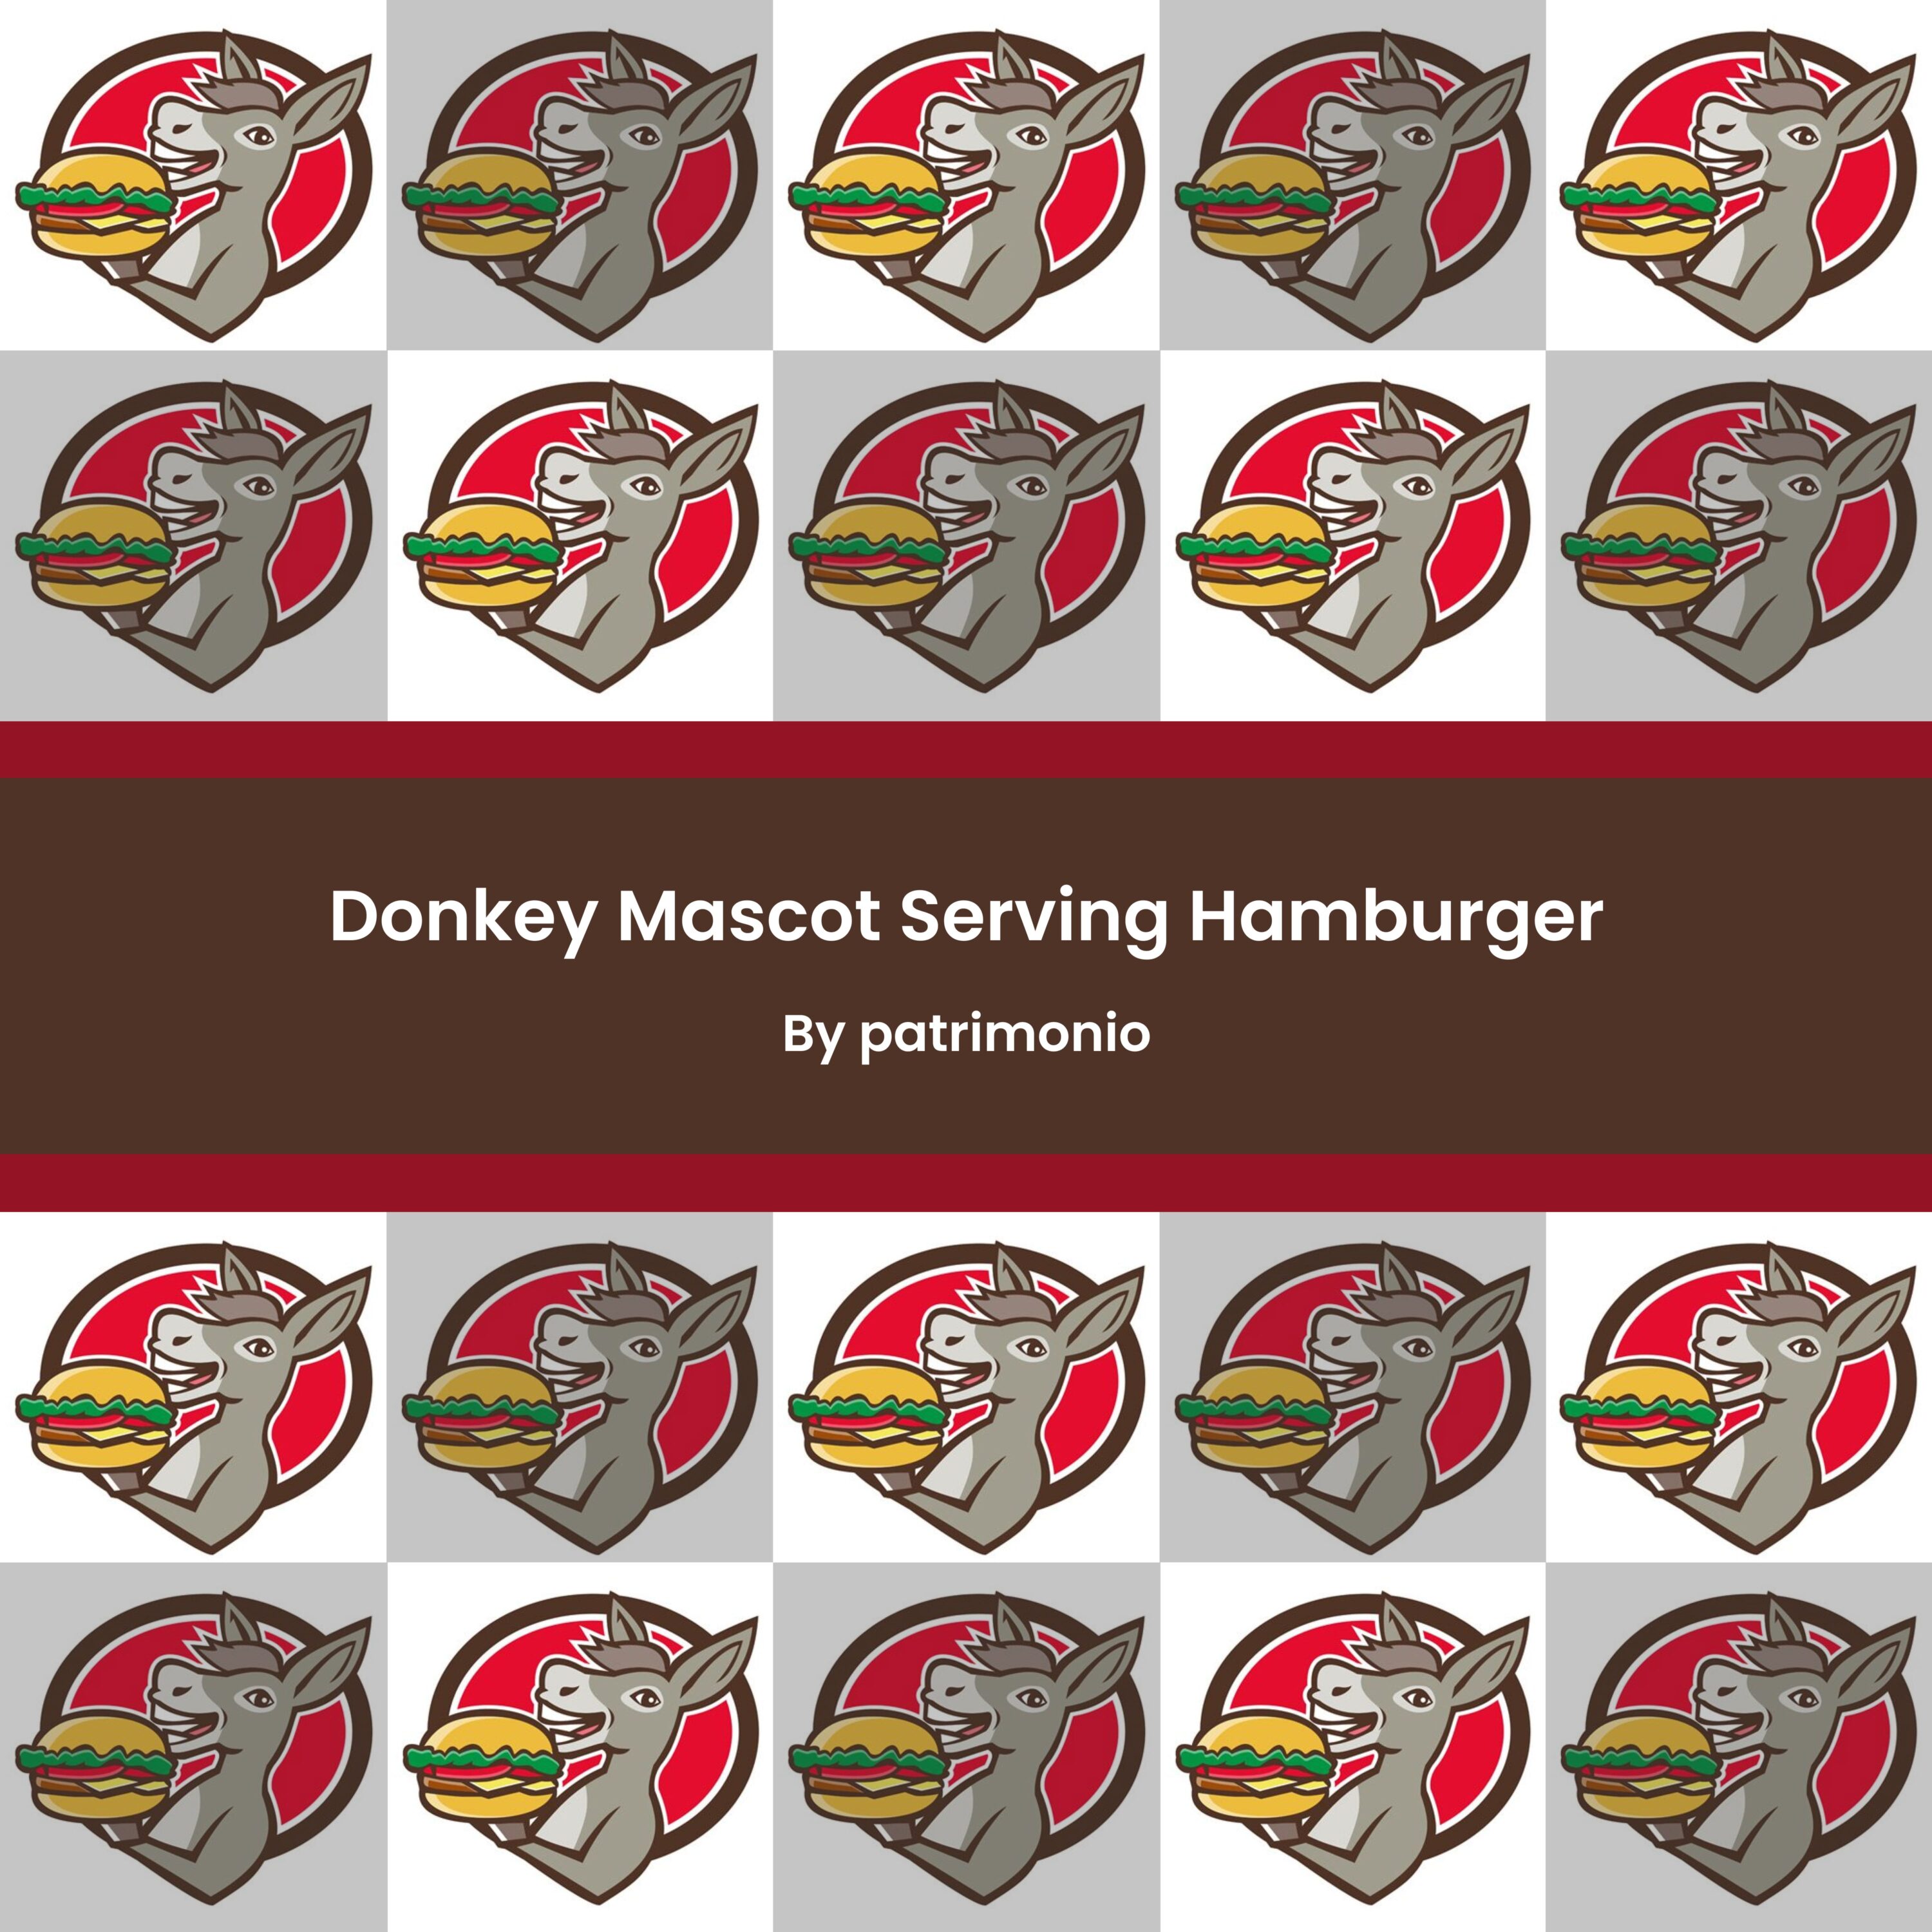 Donkey Mascot Serving Hamburger cover.